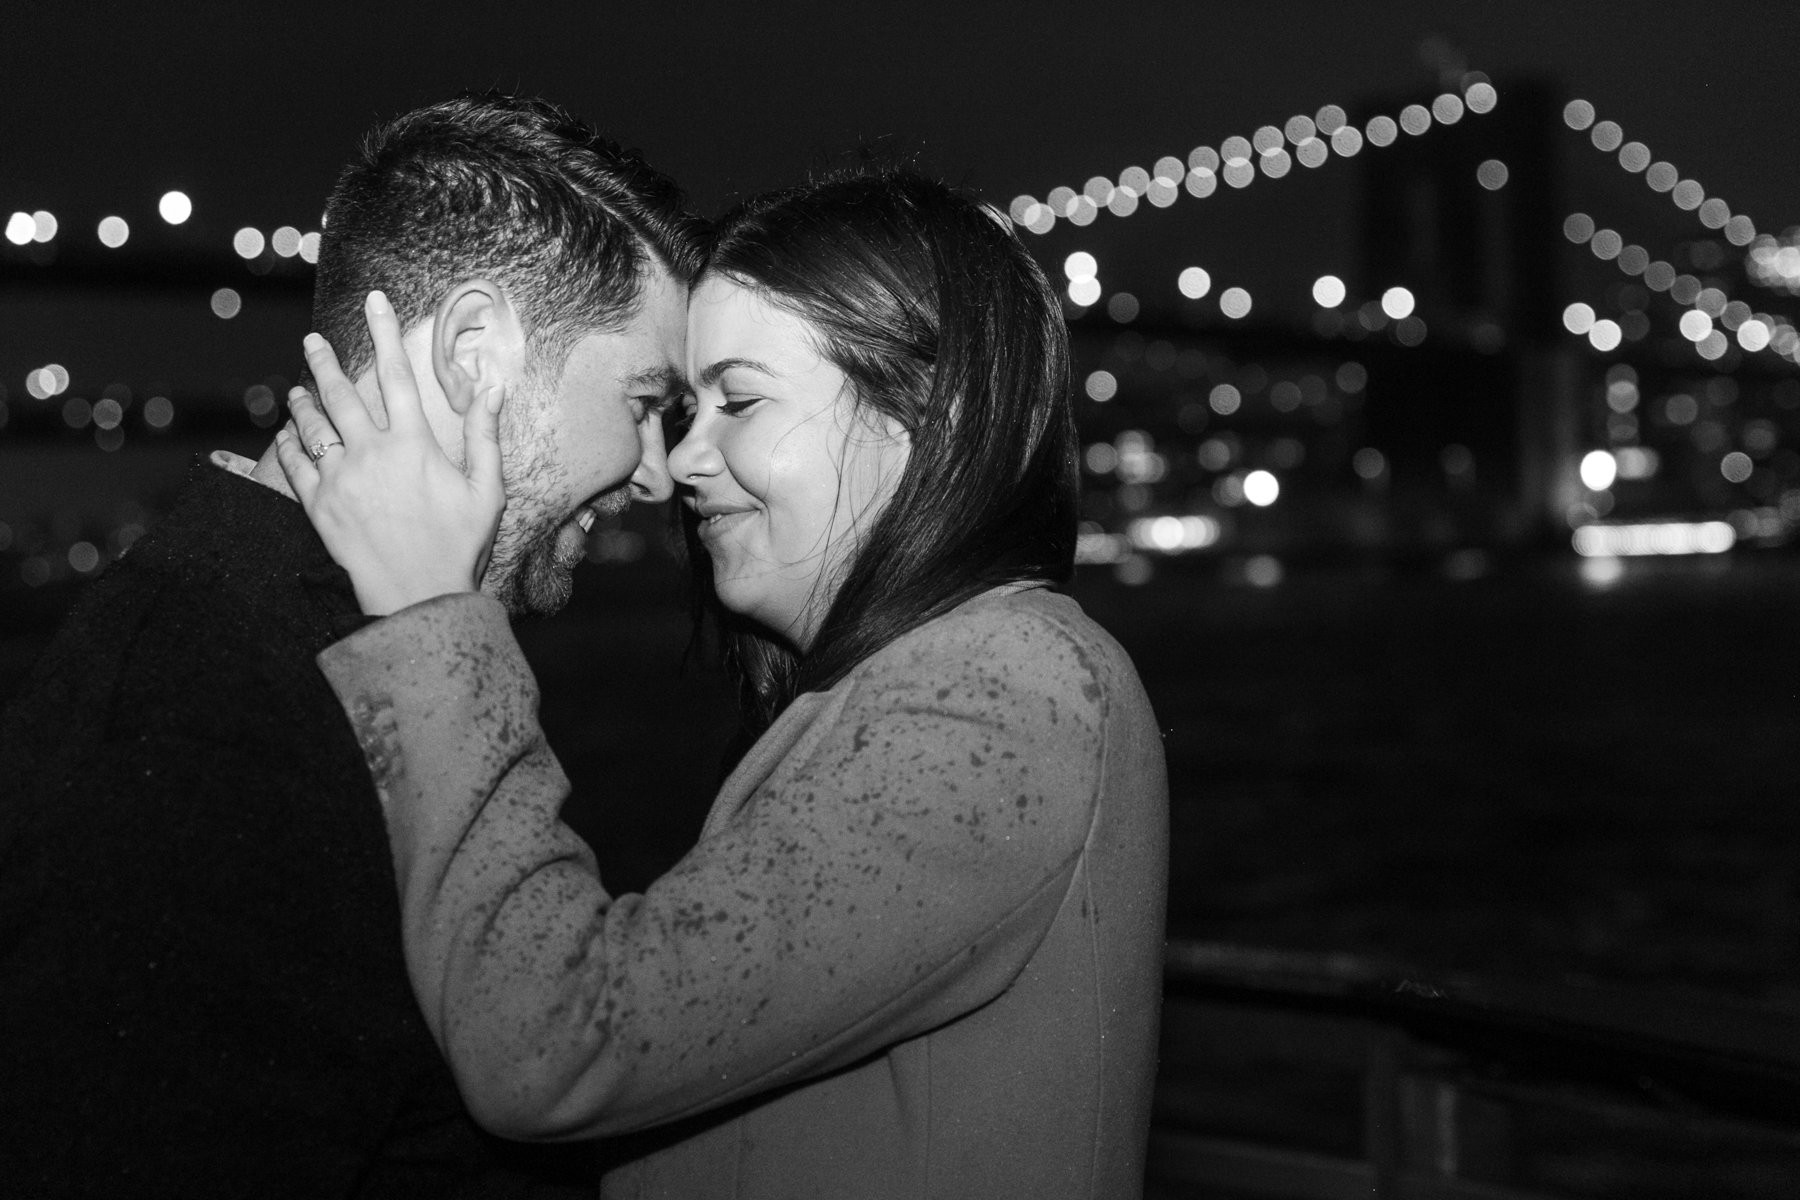 Pier 17 NYC Secret Marriage Proposal_0003.jpg